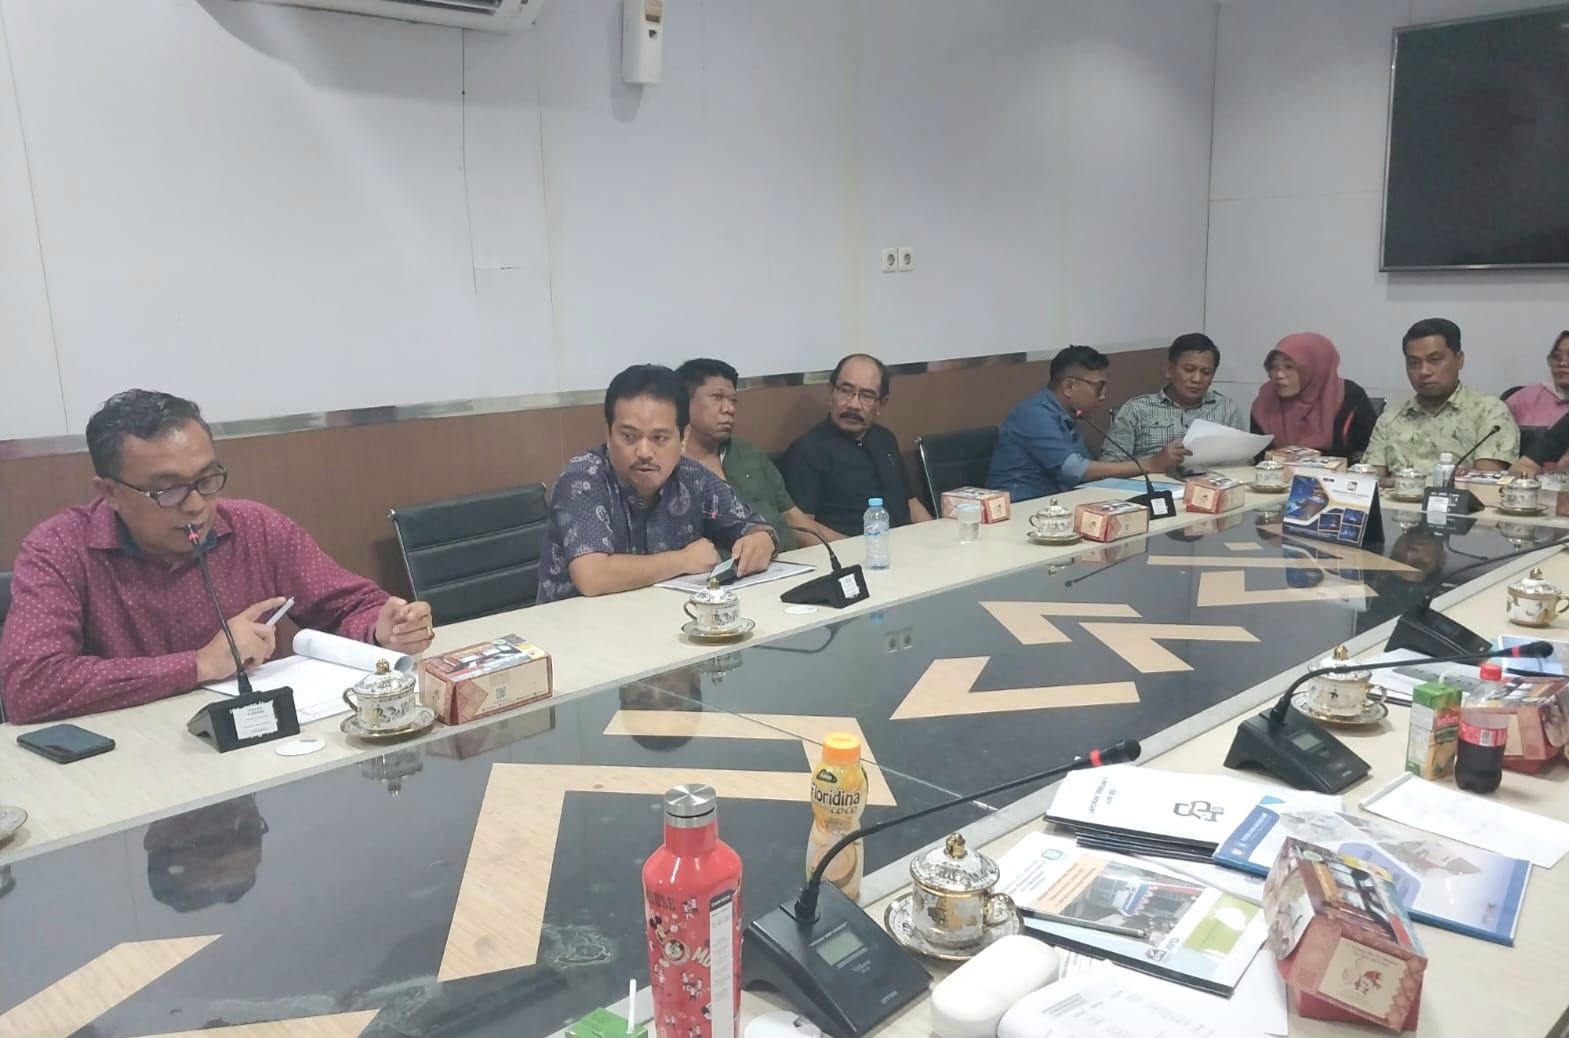 Wali Kota Makassar Sikapi Desakan Komisi B DPRD Makassar Untuk Copot Dirut PD Pasar Makassar Raya